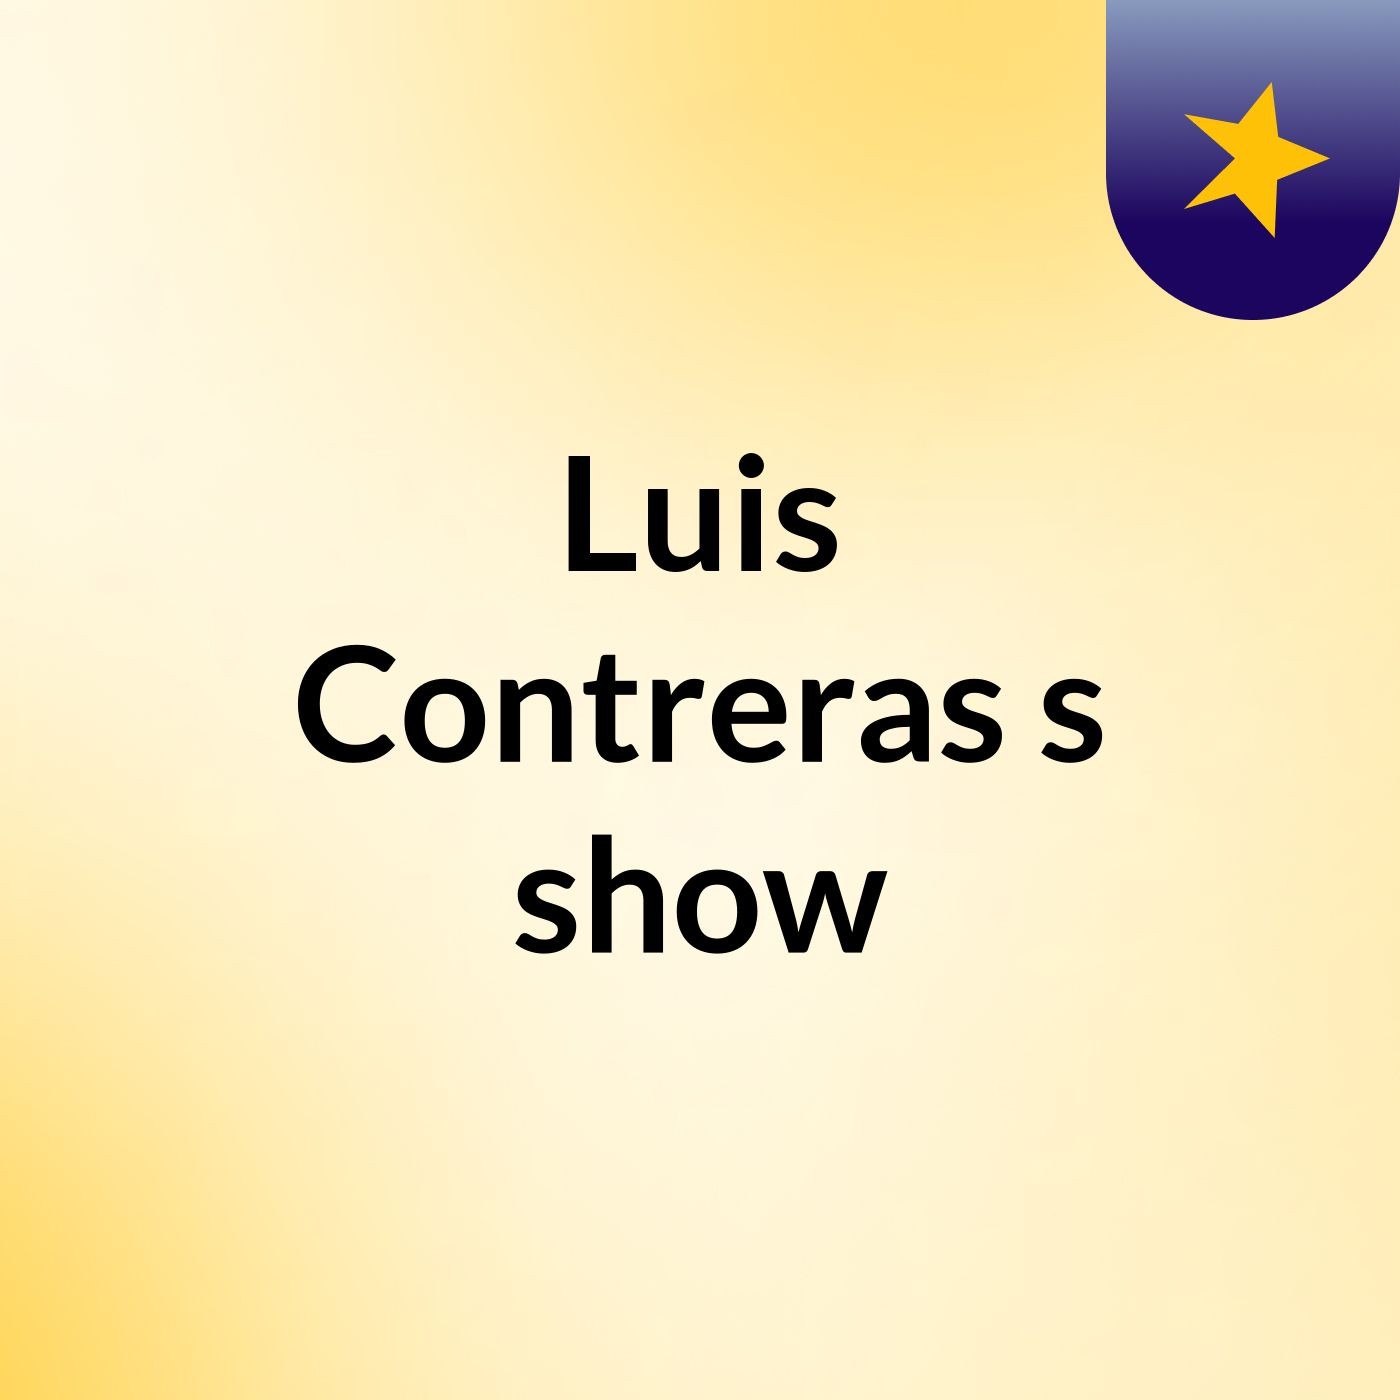 Luis Contreras's show